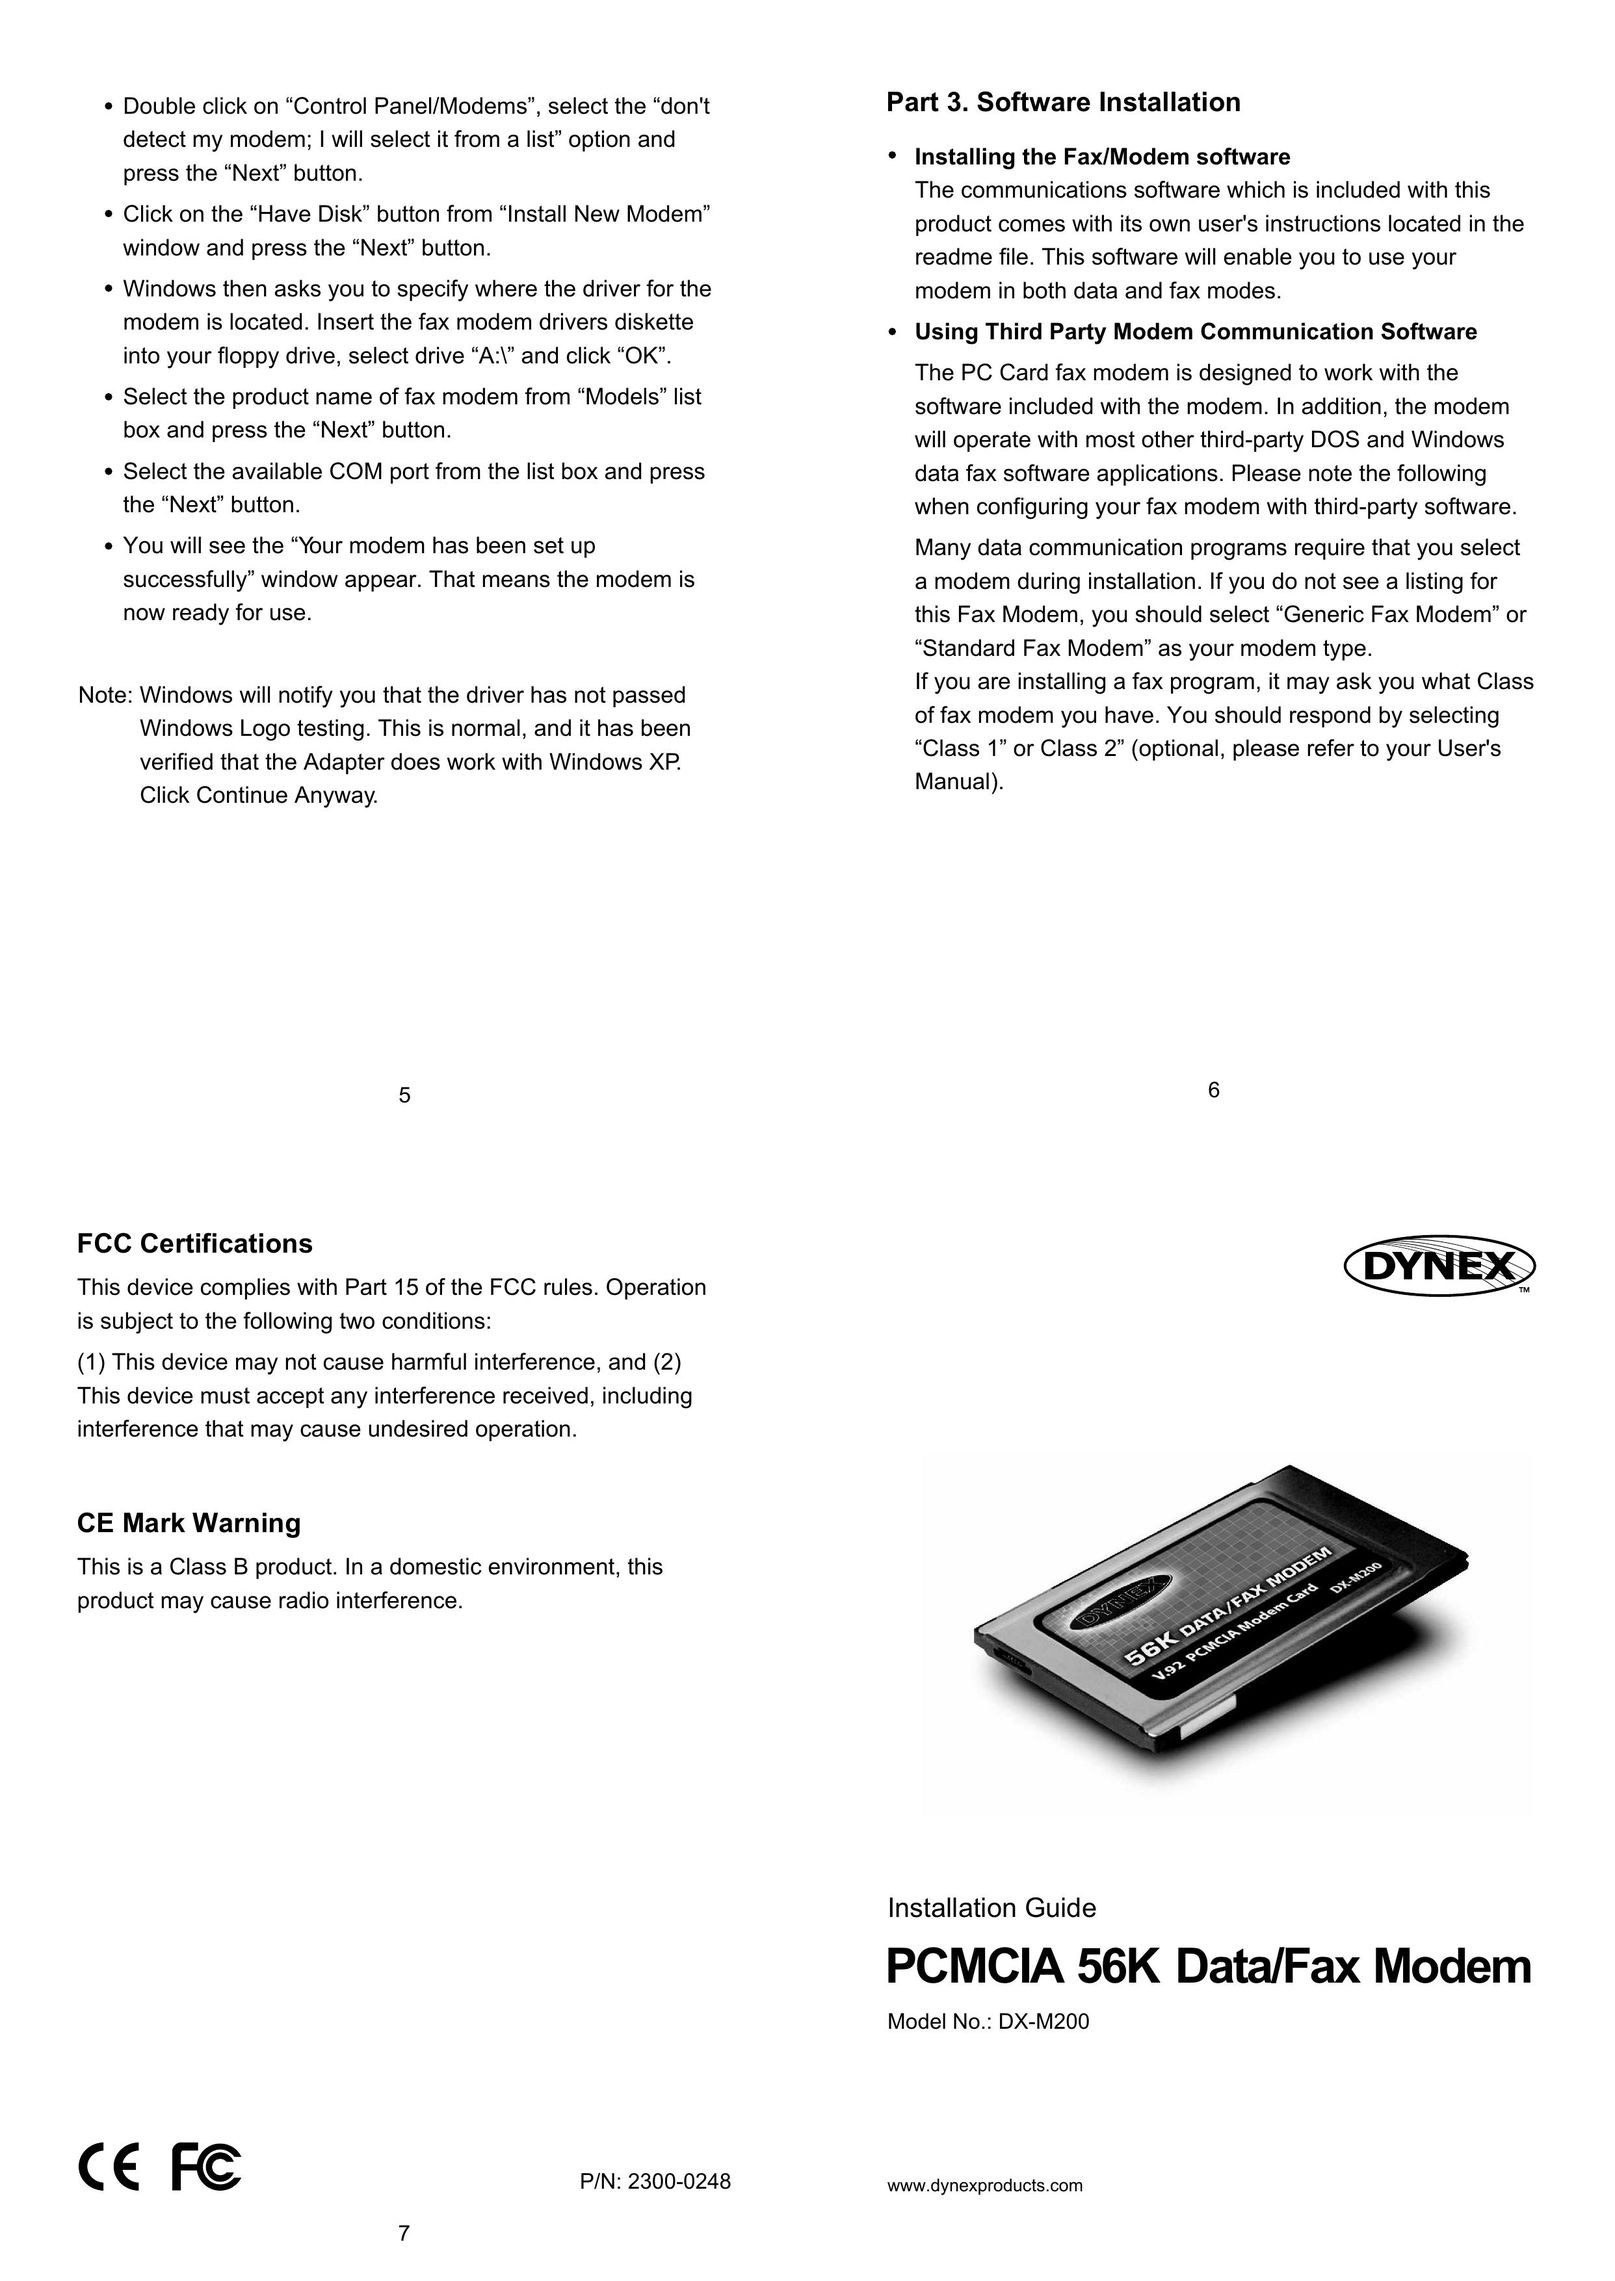 Dynex DX-M200 Modem User Manual (Page 1)